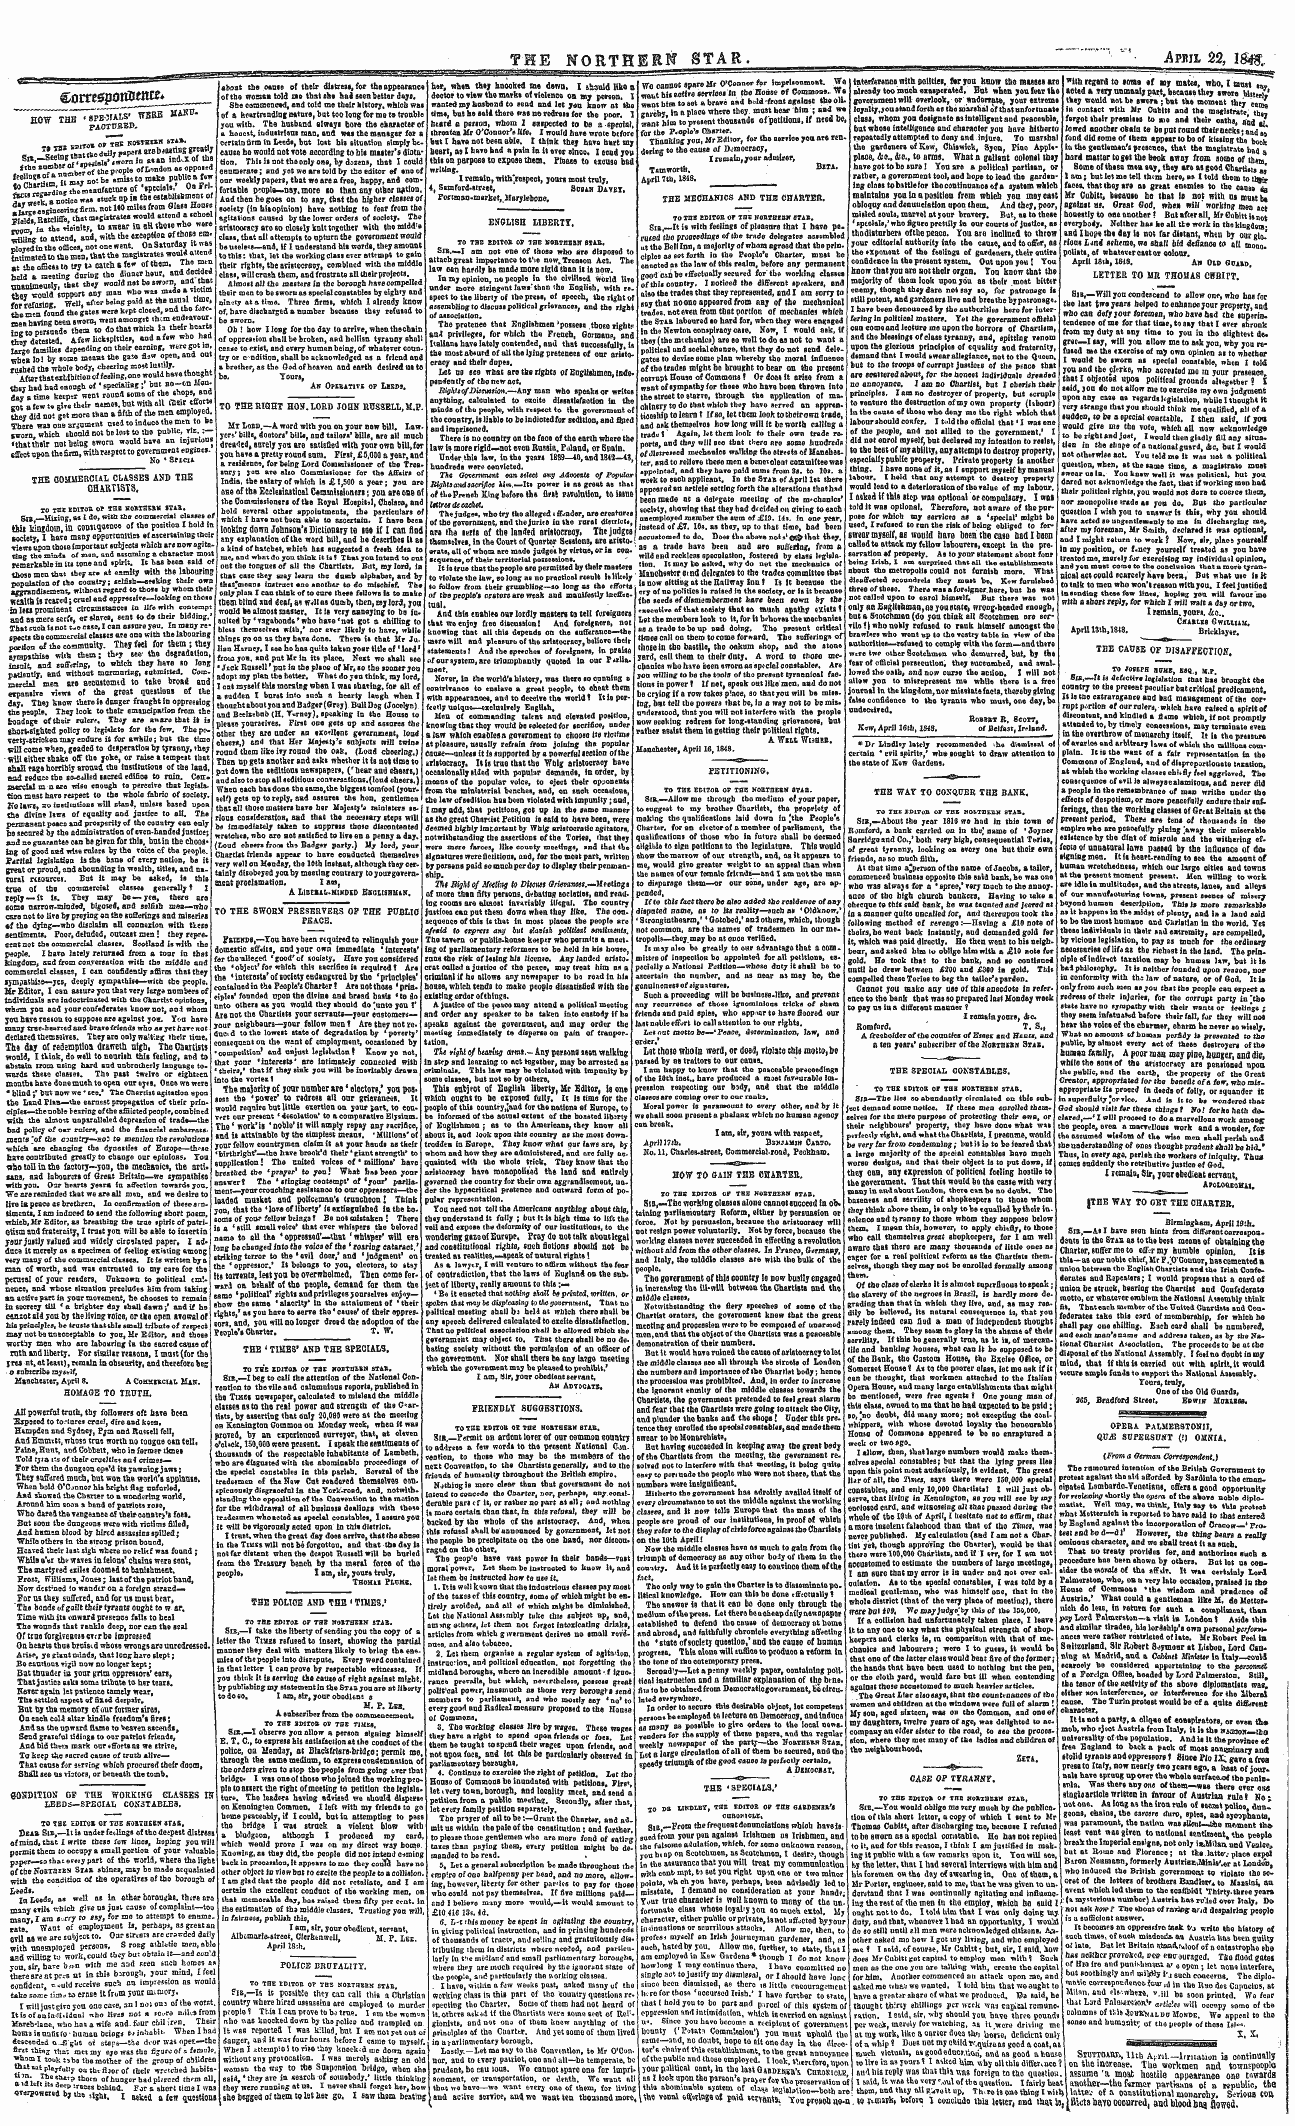 Northern Star (1837-1852): jS F Y, 3rd edition - Friendly Suggestions. To Tbe Zdltott Oz ...